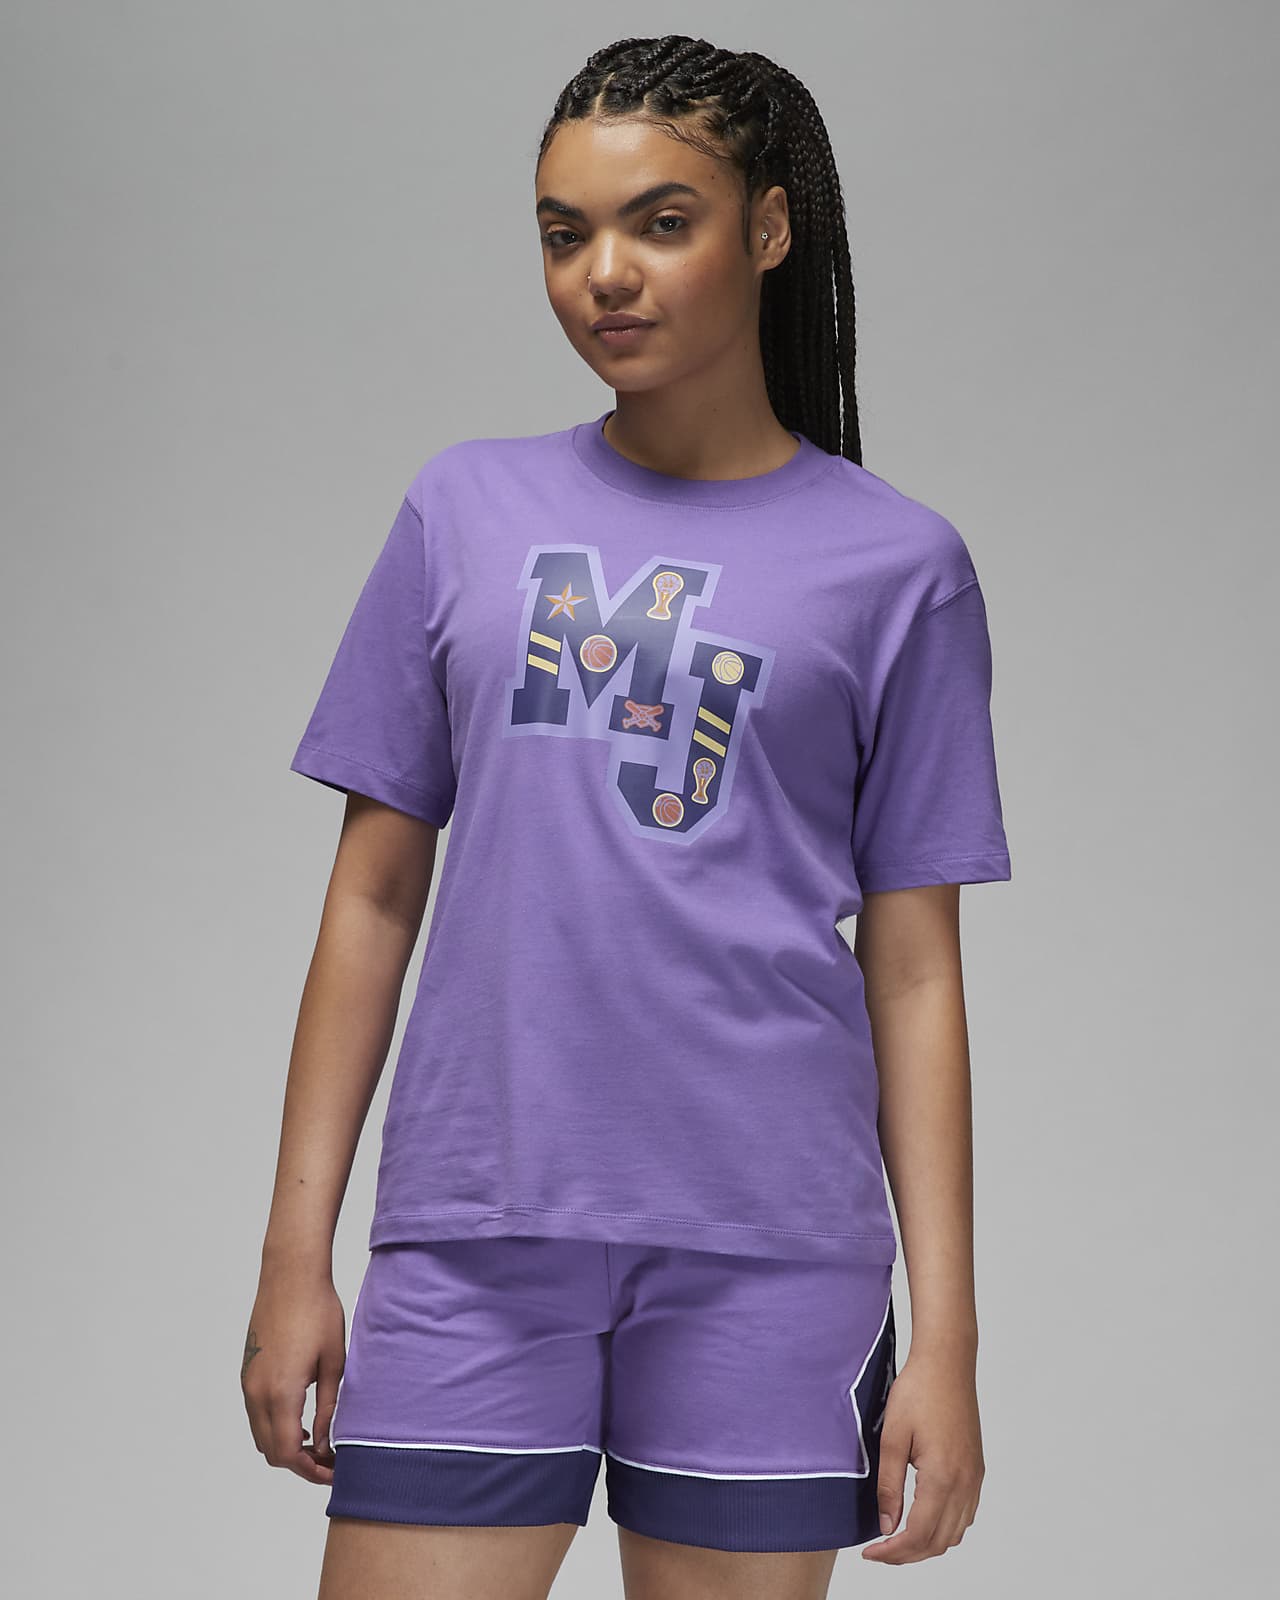 Jordan Women's Oversized Graphic T-Shirt